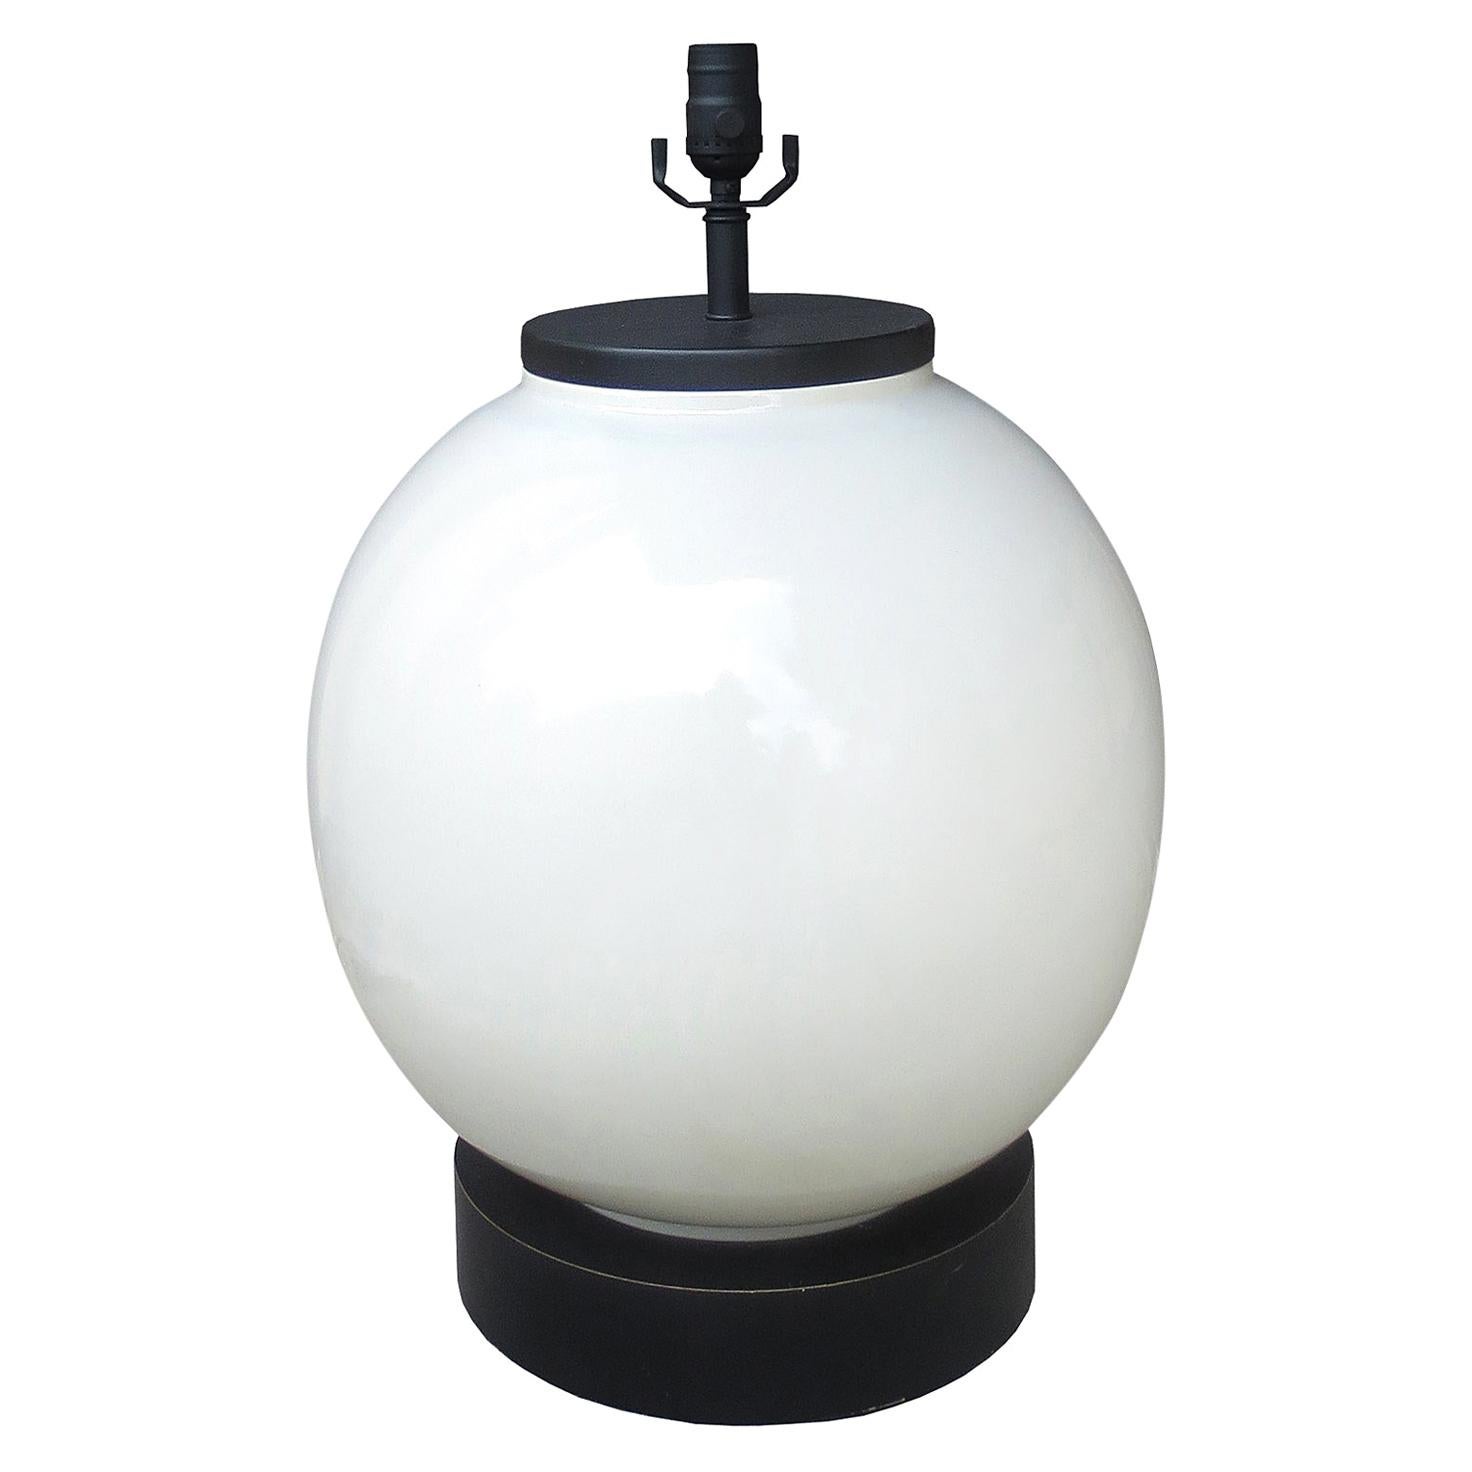 Large Scale Mid-20th Century Round White Ceramic Lamp, Black Base, circa 1960s For Sale